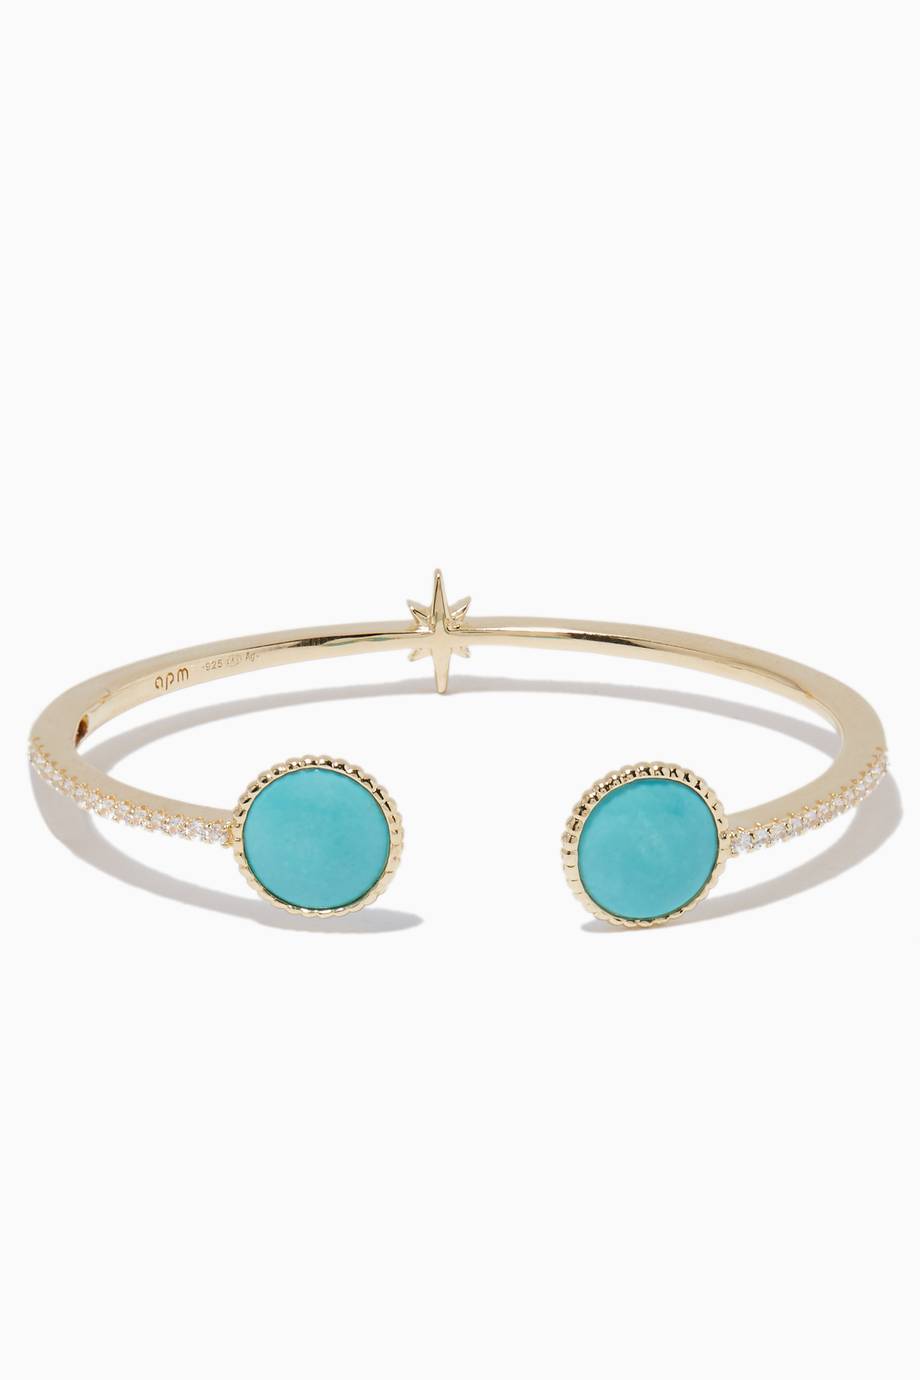 Shop Luxury APM Monaco Gold Star & Turquoise Bracelet | Ounass UAE